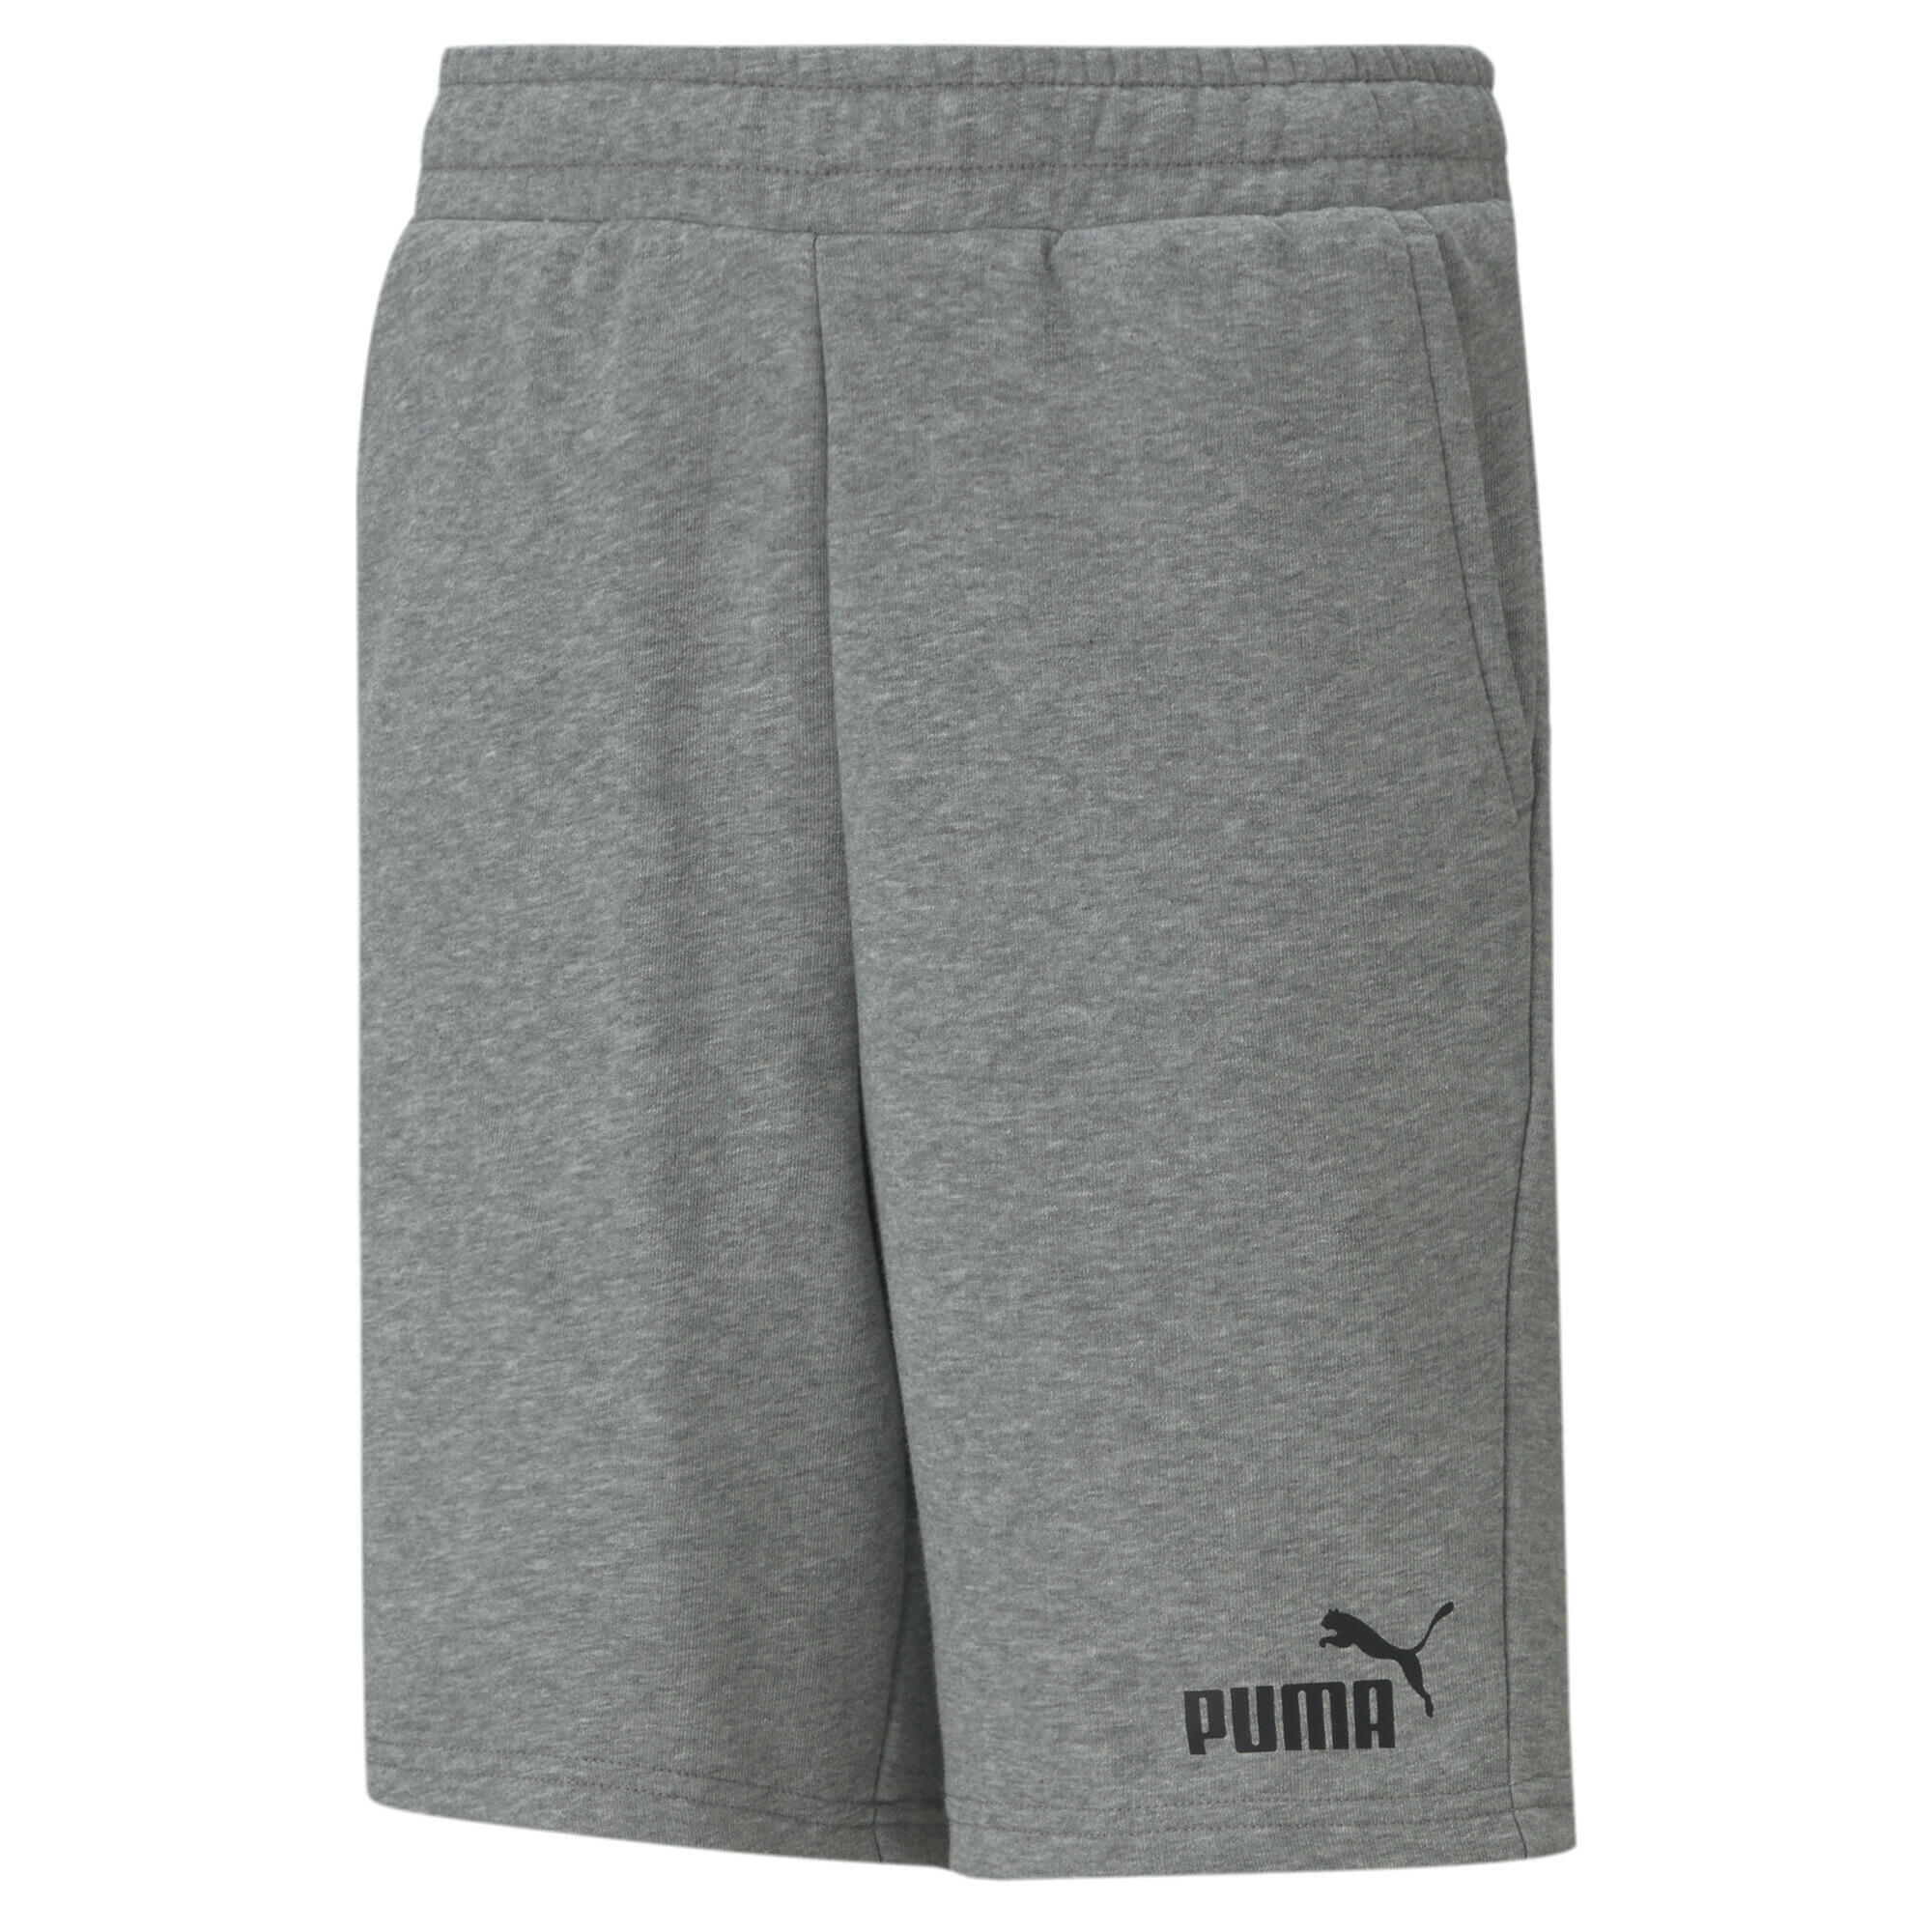 Мужские шорты Puma Essential, cерый